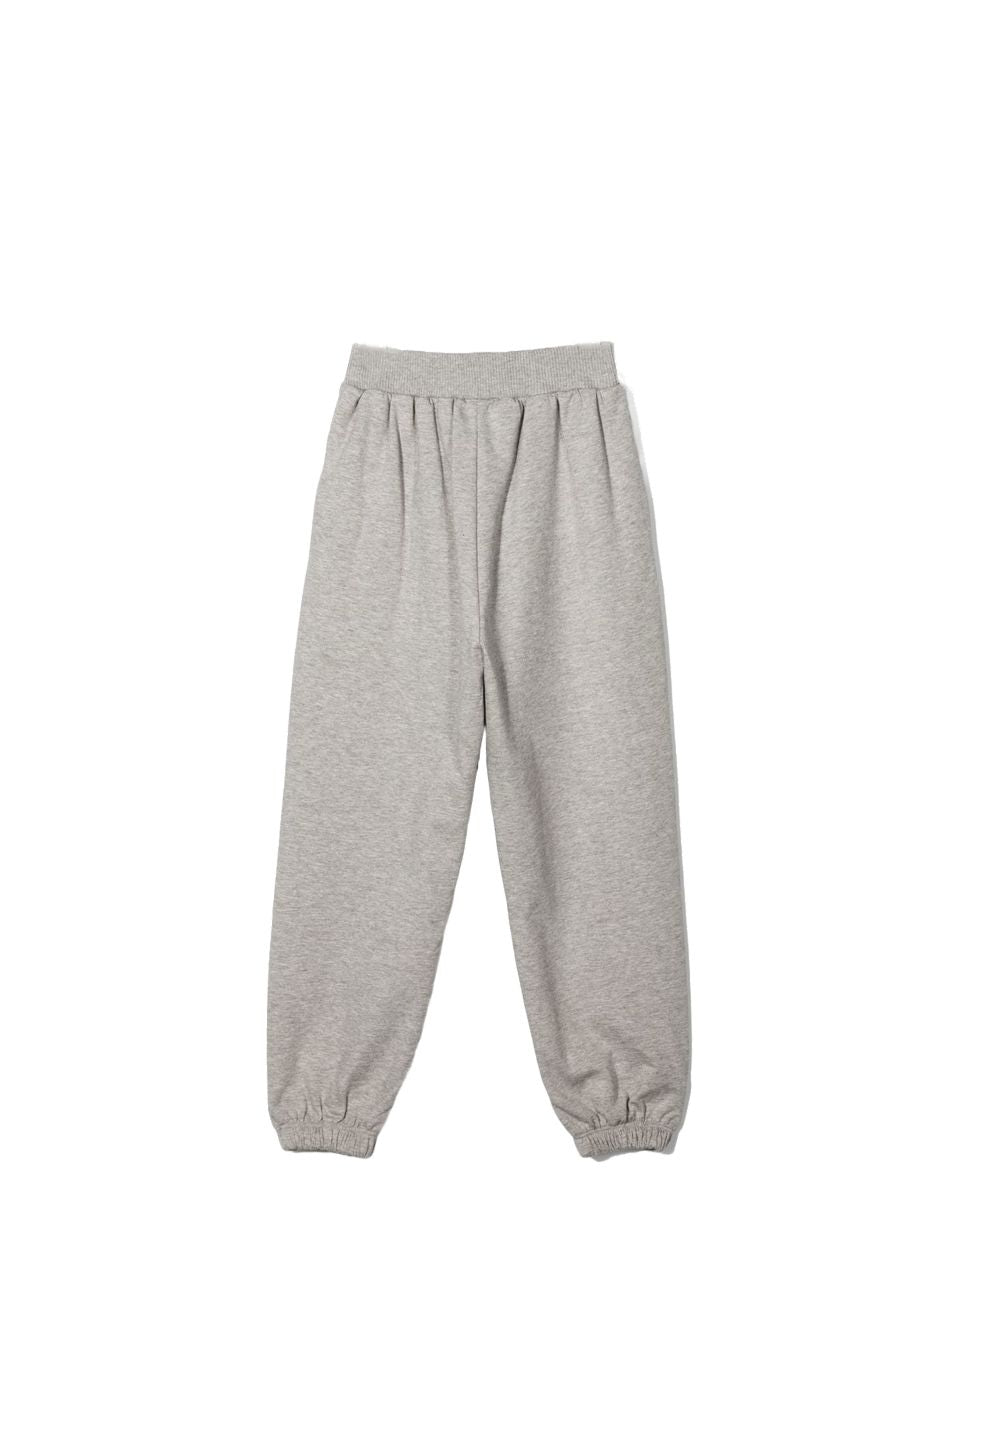 Pantalone felpa grigio per bambina - Primamoda kids